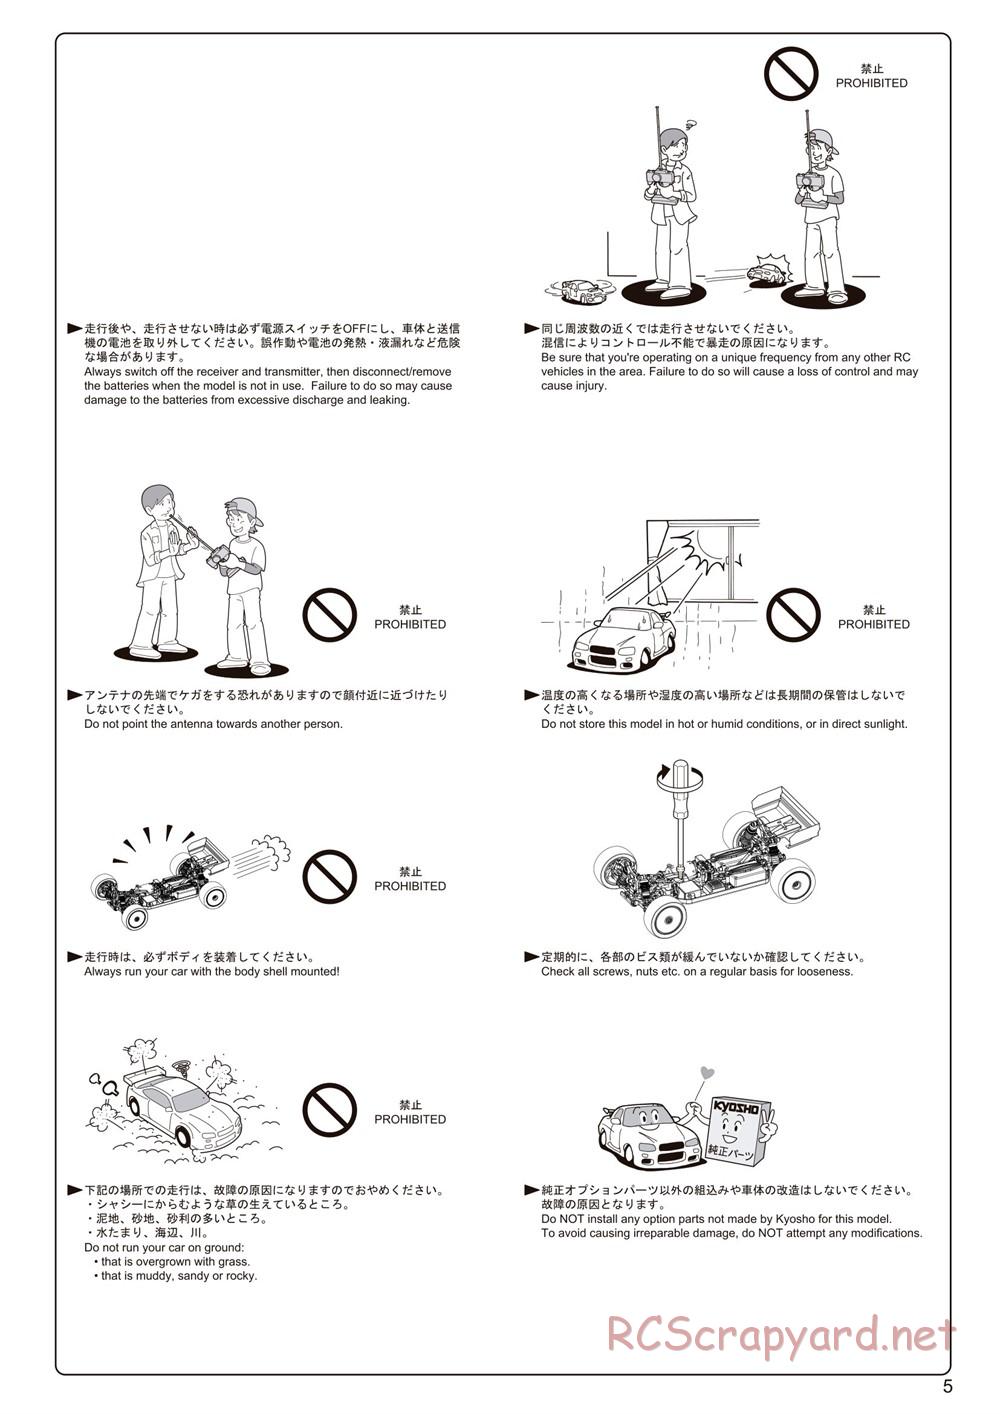 Kyosho - Lazer ZX6.6 - Manual - Page 5